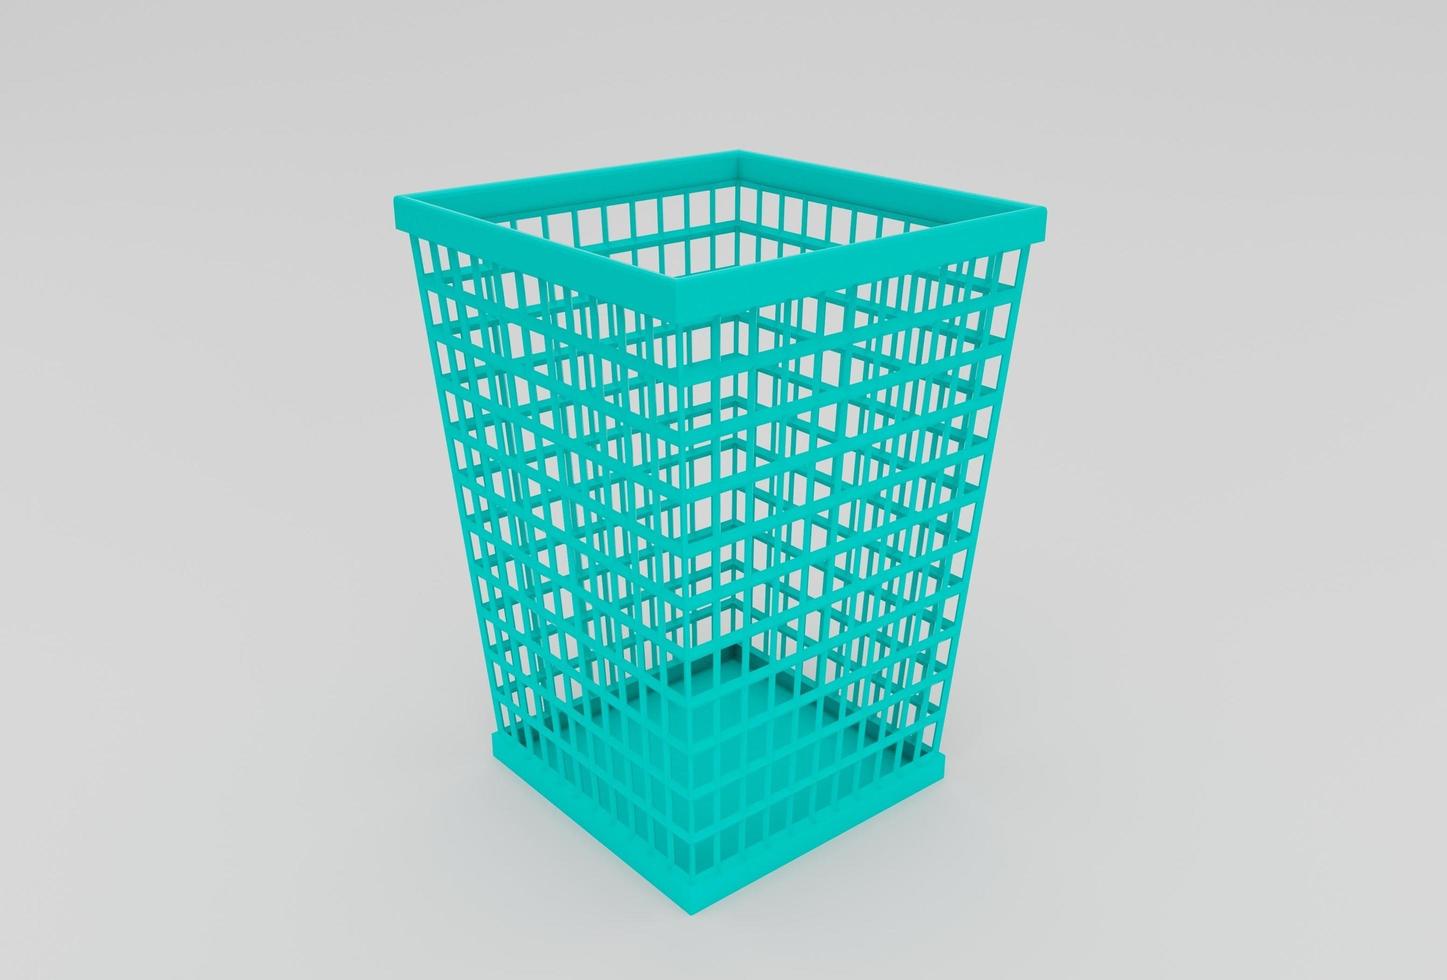 plastic Basket minimal 3d rendering on white background photo